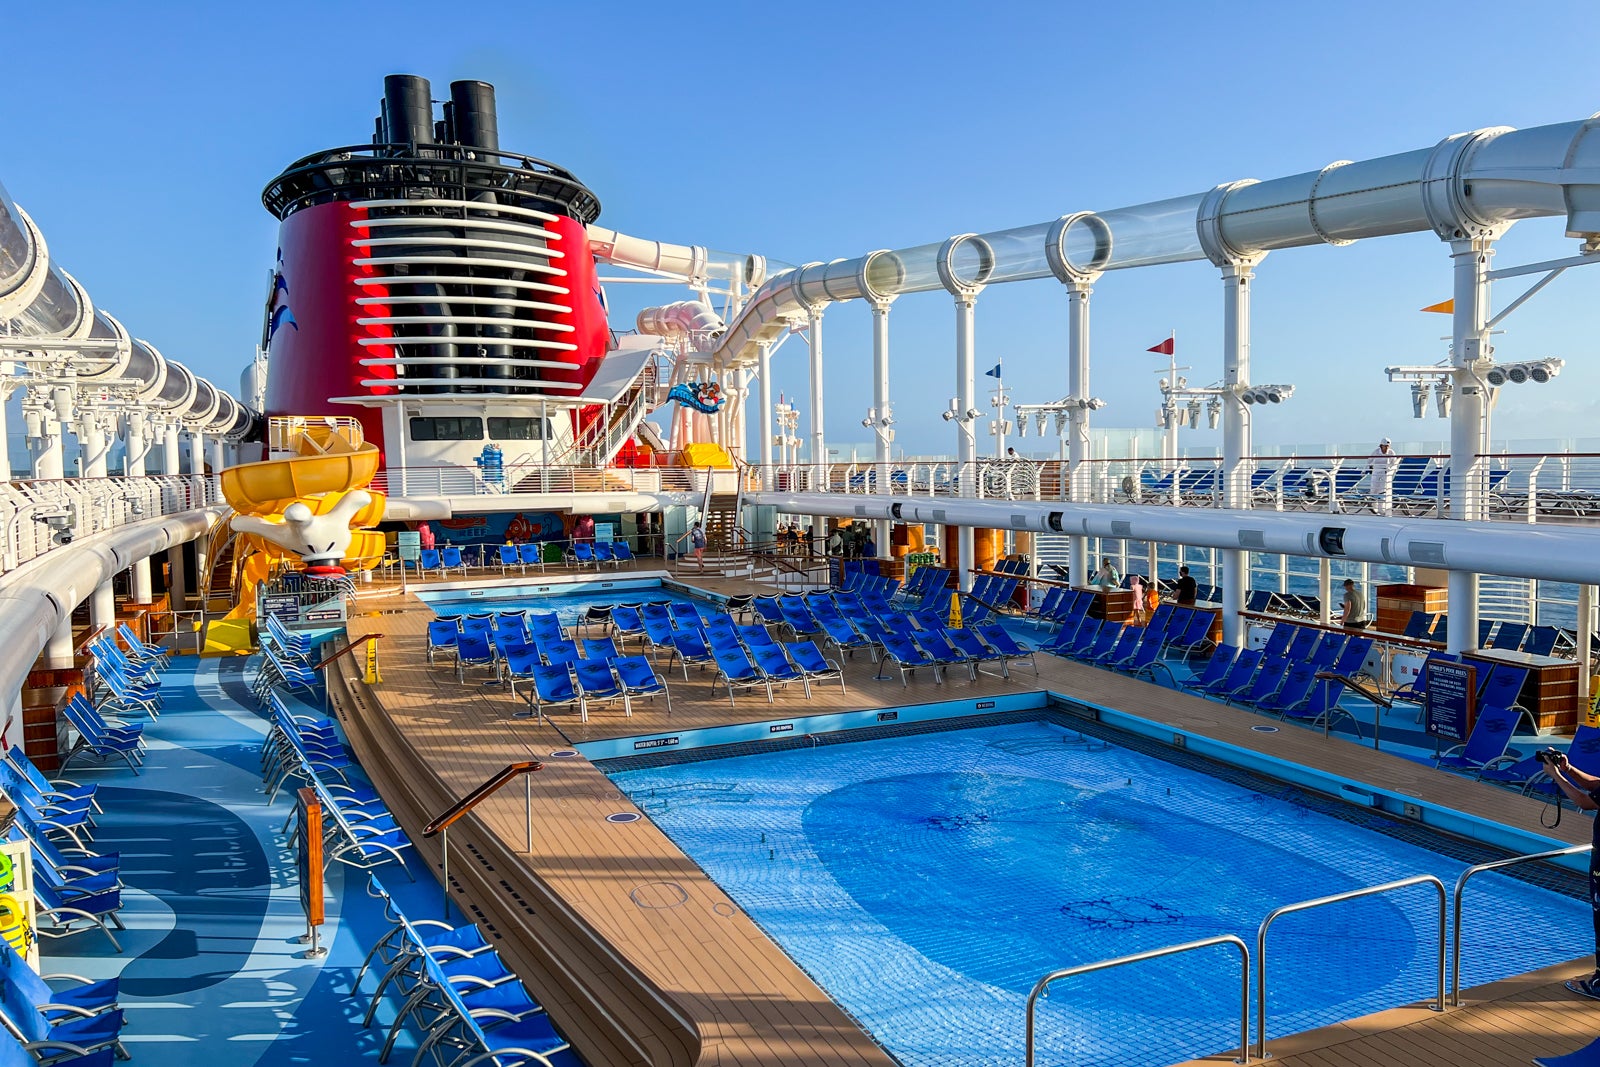 Pool on Disney Dream cruise ship